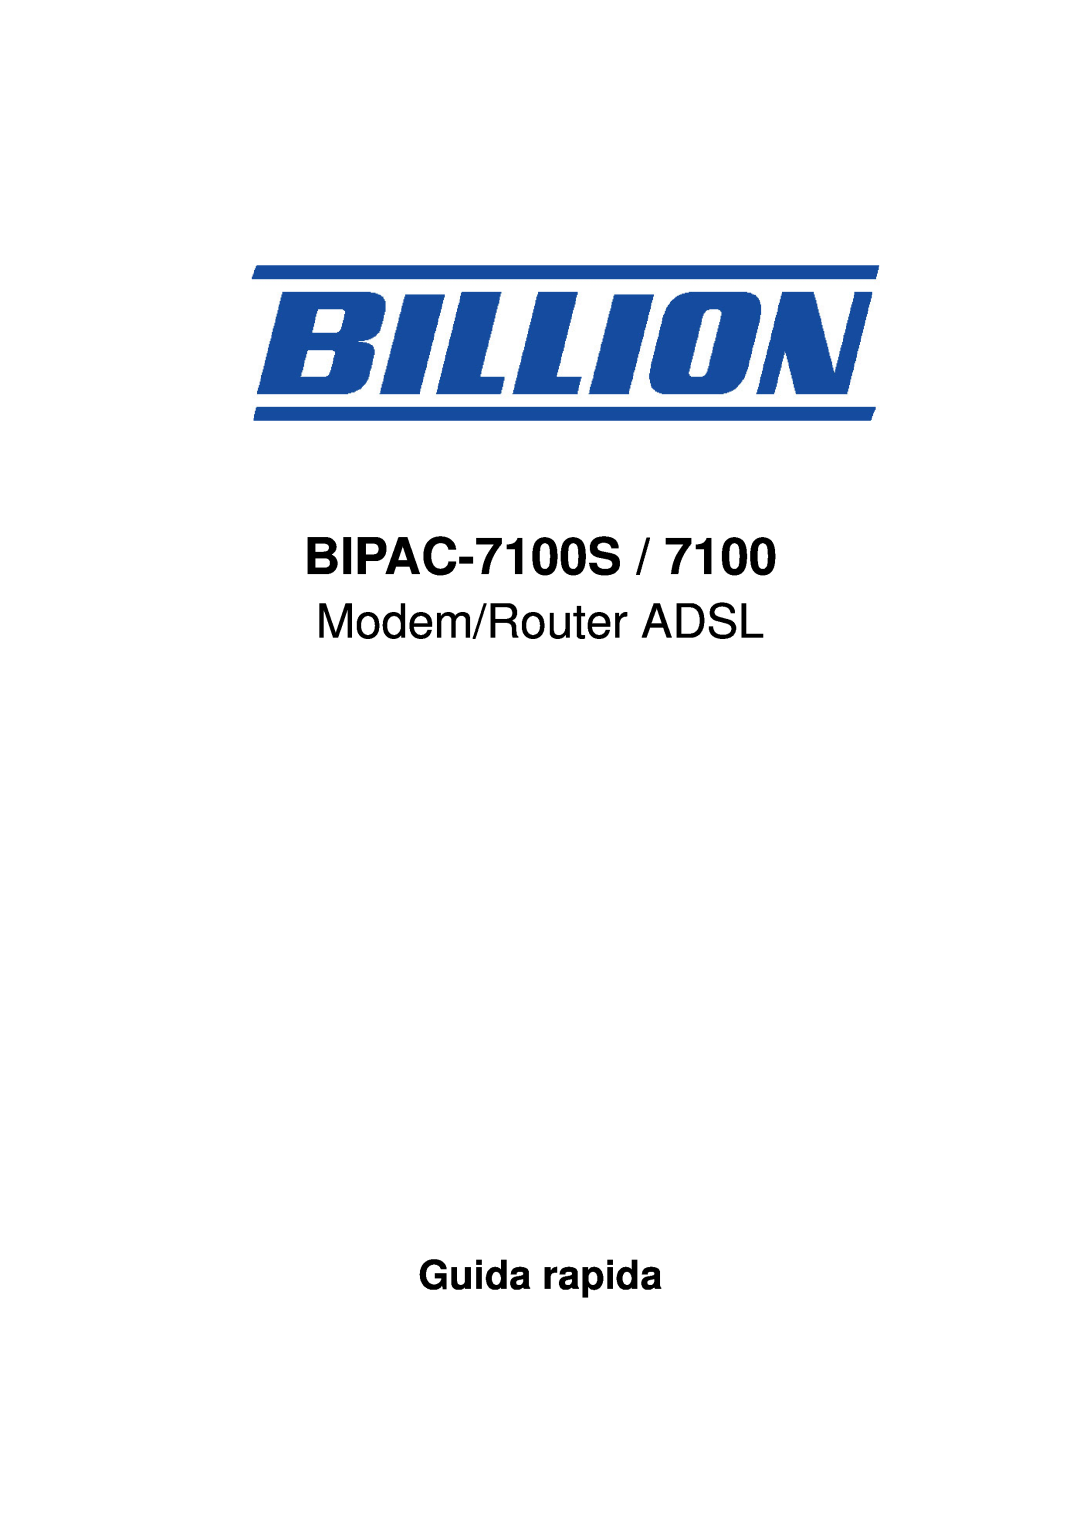 Billion Electric Company manual BIPAC-7100S, Modem/Router ADSL, Guida rapida 